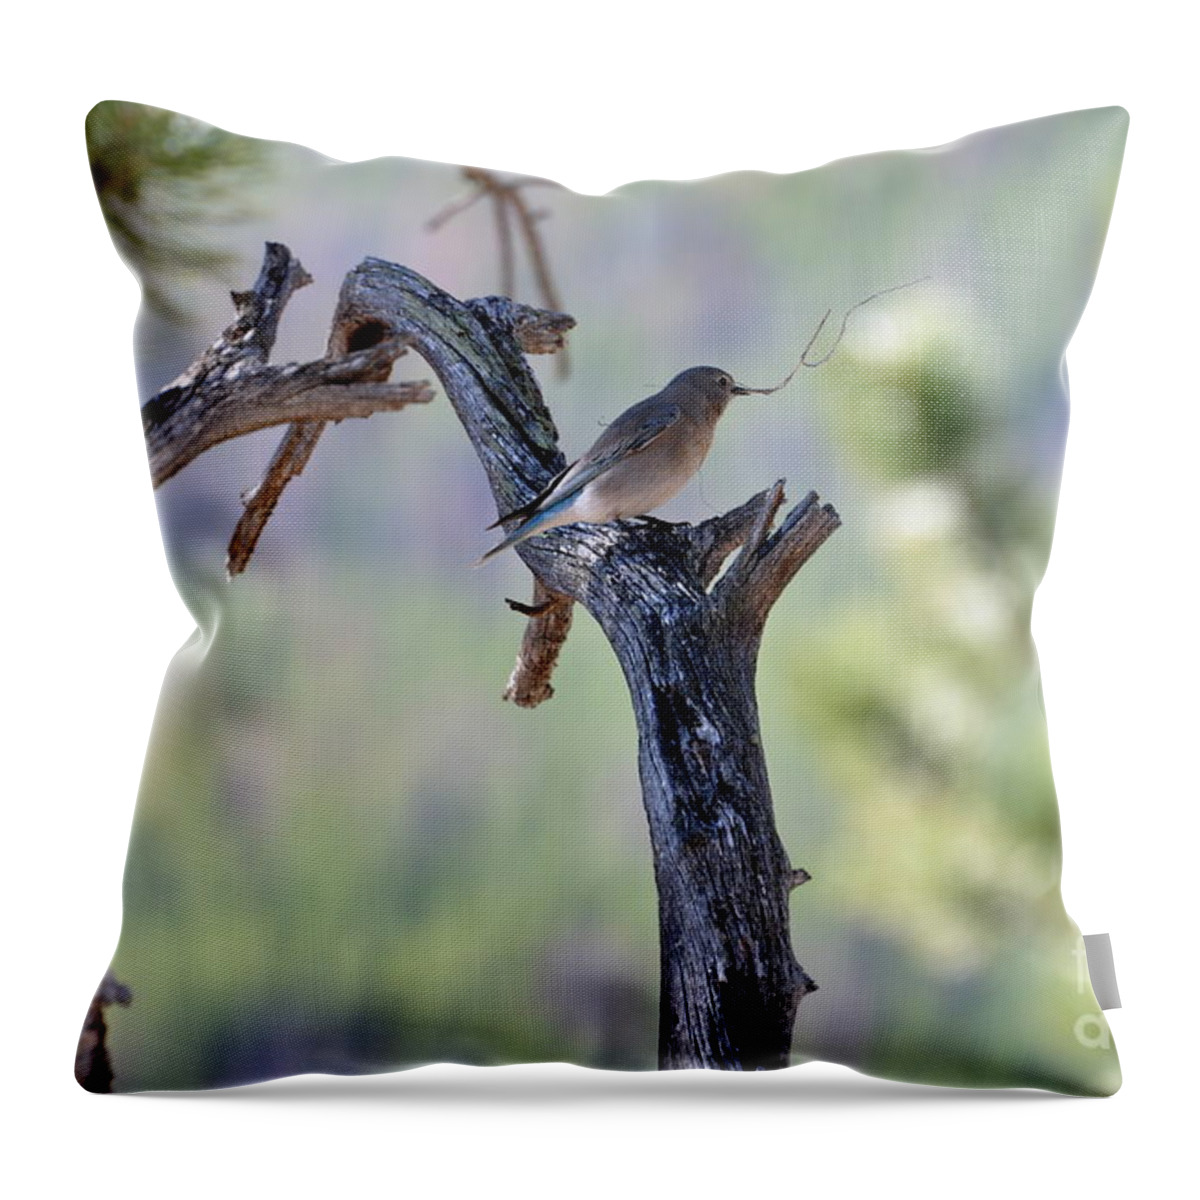 Birds Throw Pillow featuring the photograph Building Her Nest by Dorrene BrownButterfield